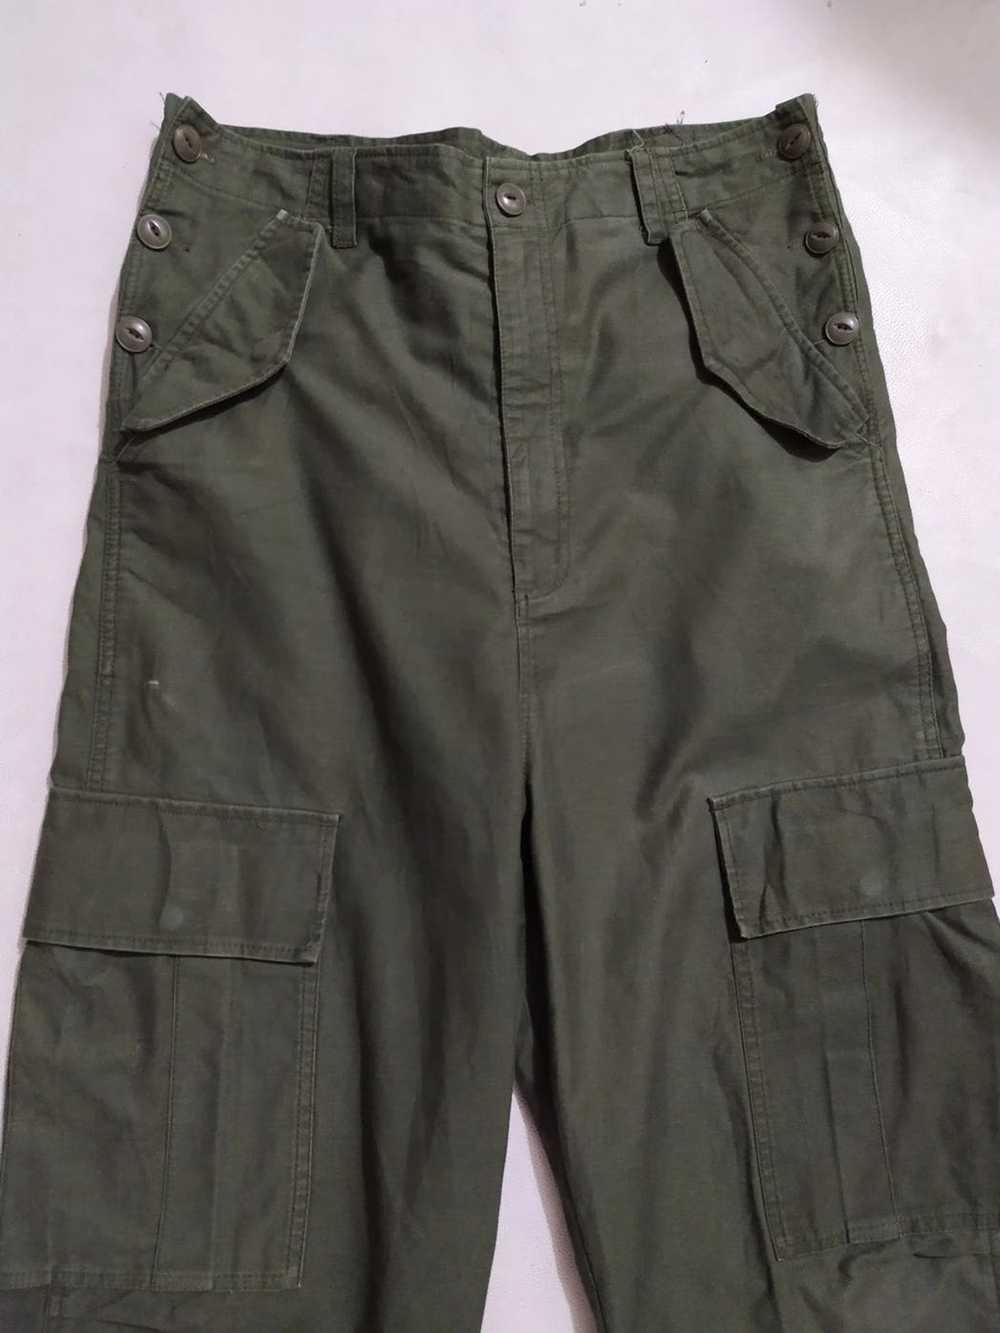 Japanese Brand Cargo Pants - image 2